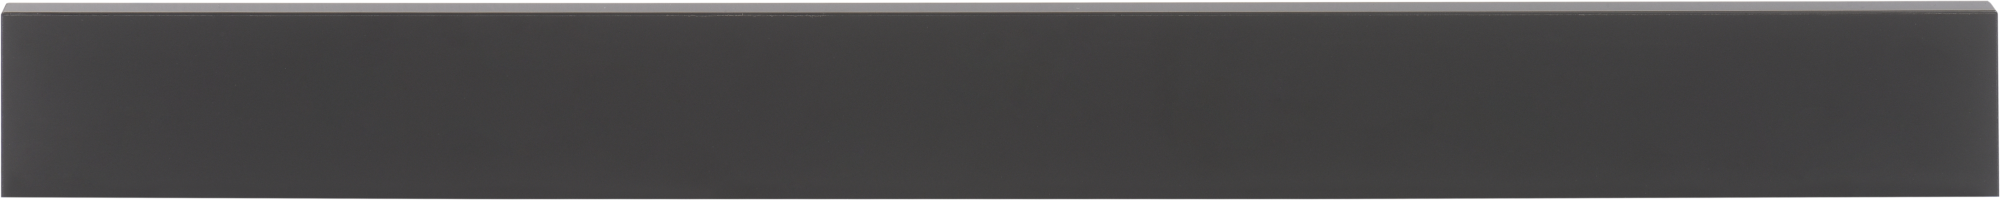 Regleta angular delinia id mikonos gris brillo 9x76,8 cm